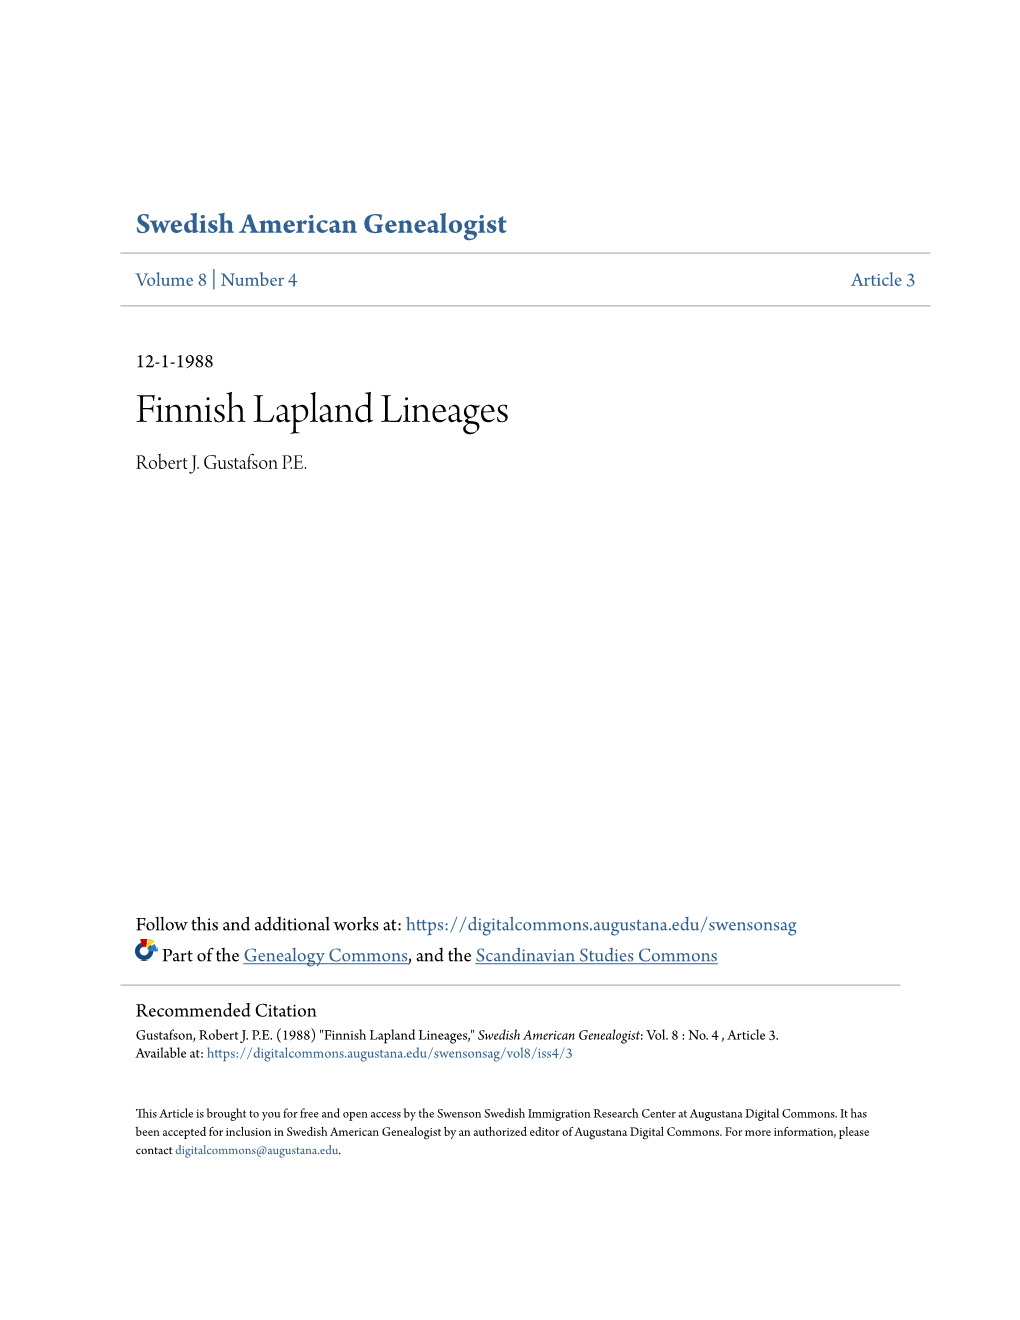 Finnish Lapland Lineages Robert J